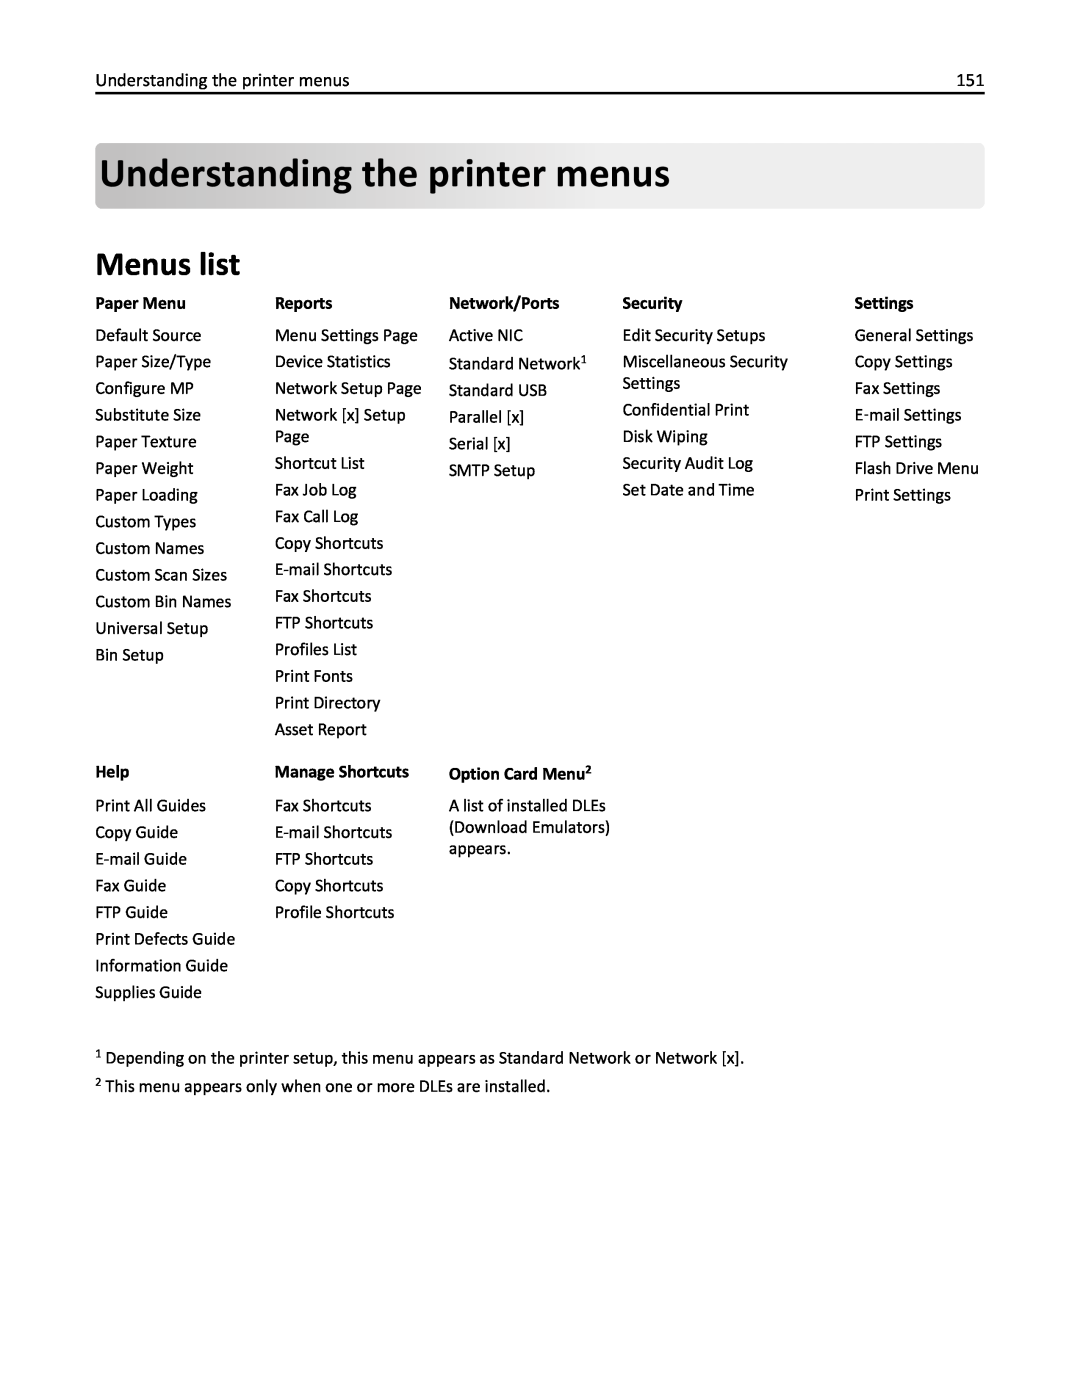 Lexmark MX710 Understandingthe printer menus, Menus list, Paper Menu, Help, Reports, Network/Ports, Security, Settings 